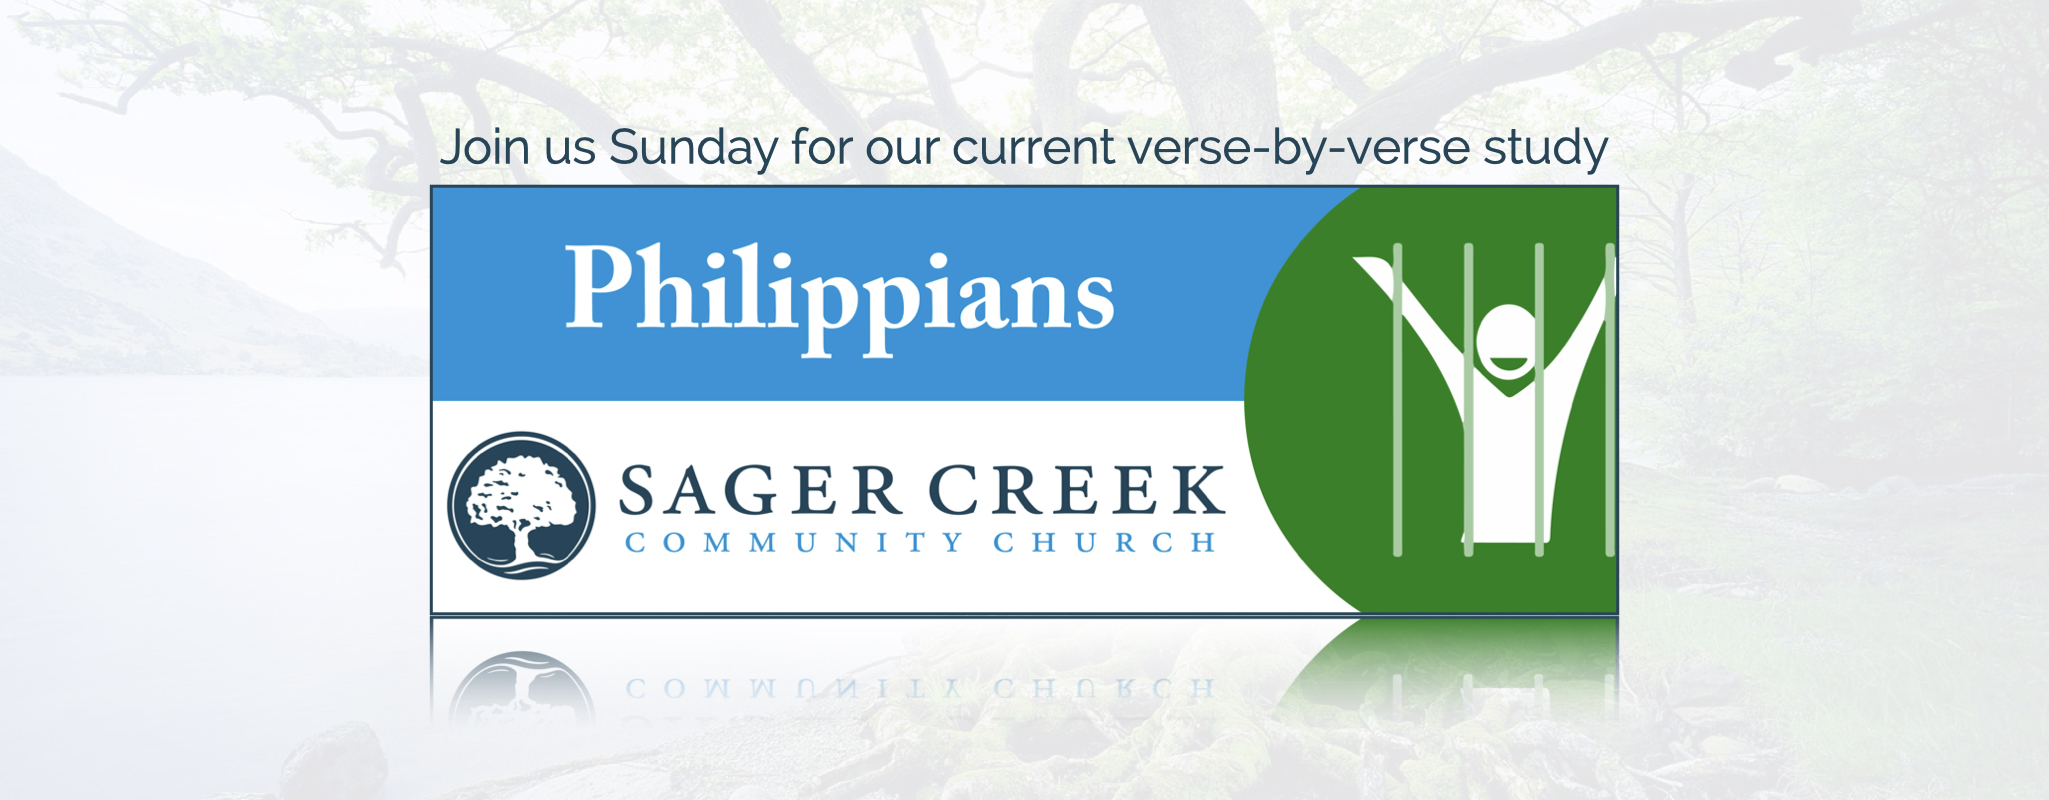 Philippians web banner.001.jpeg